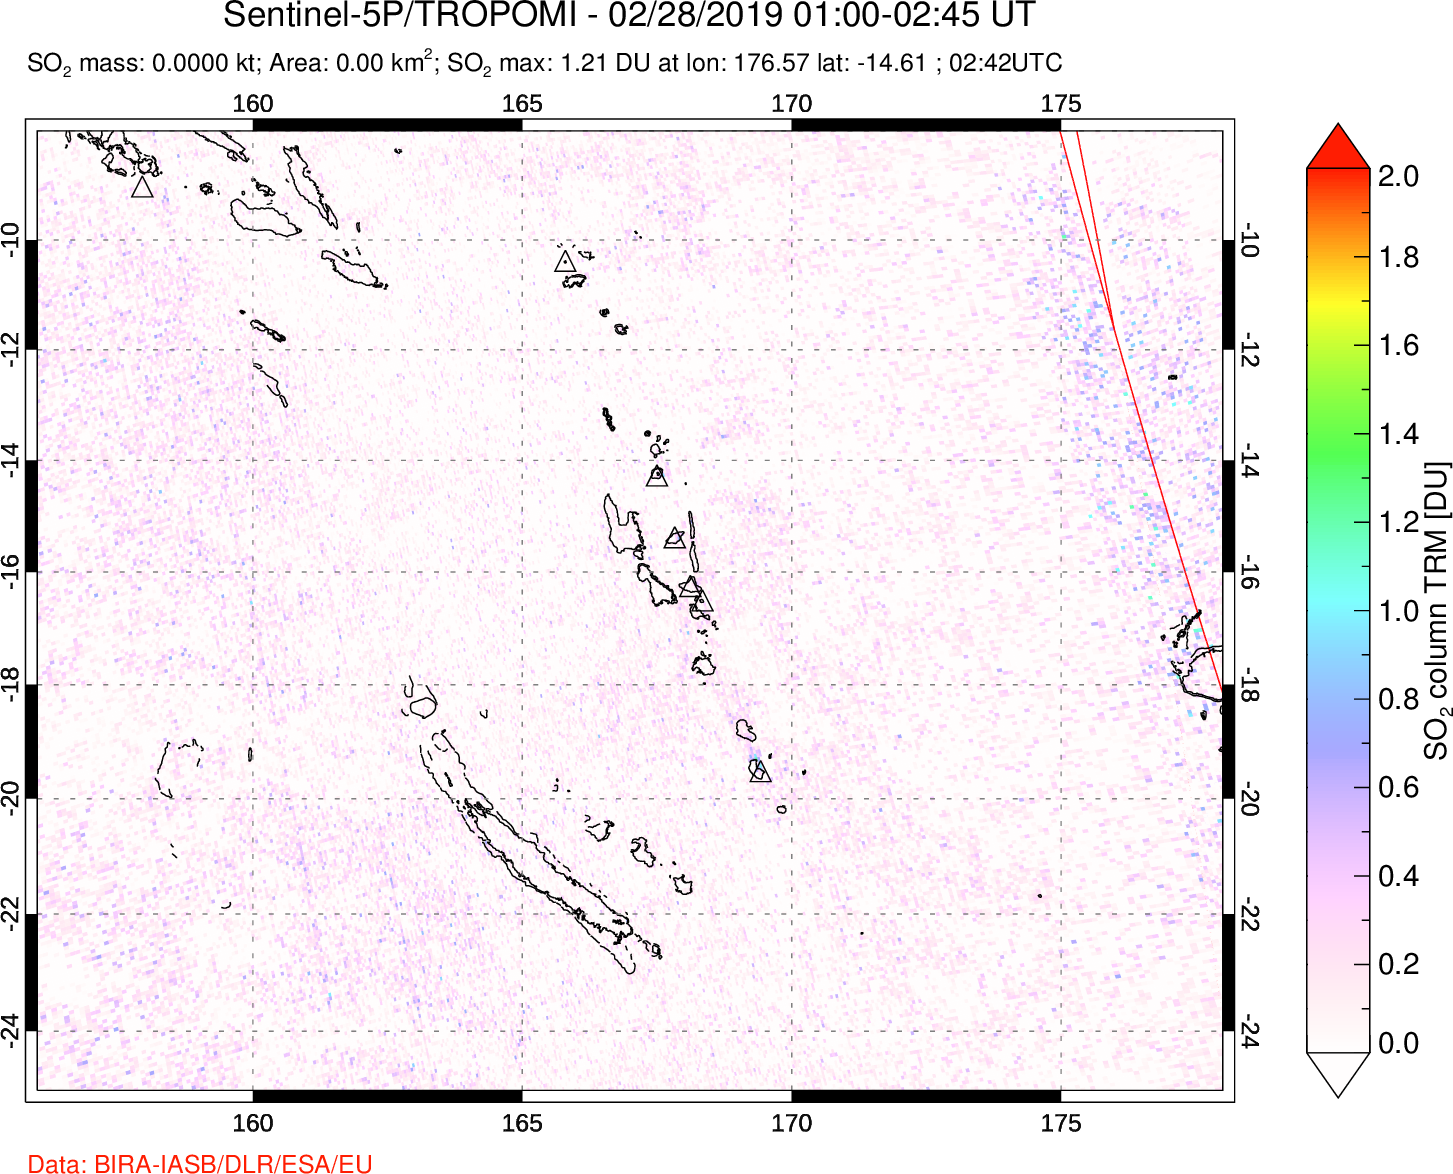 A sulfur dioxide image over Vanuatu, South Pacific on Feb 28, 2019.